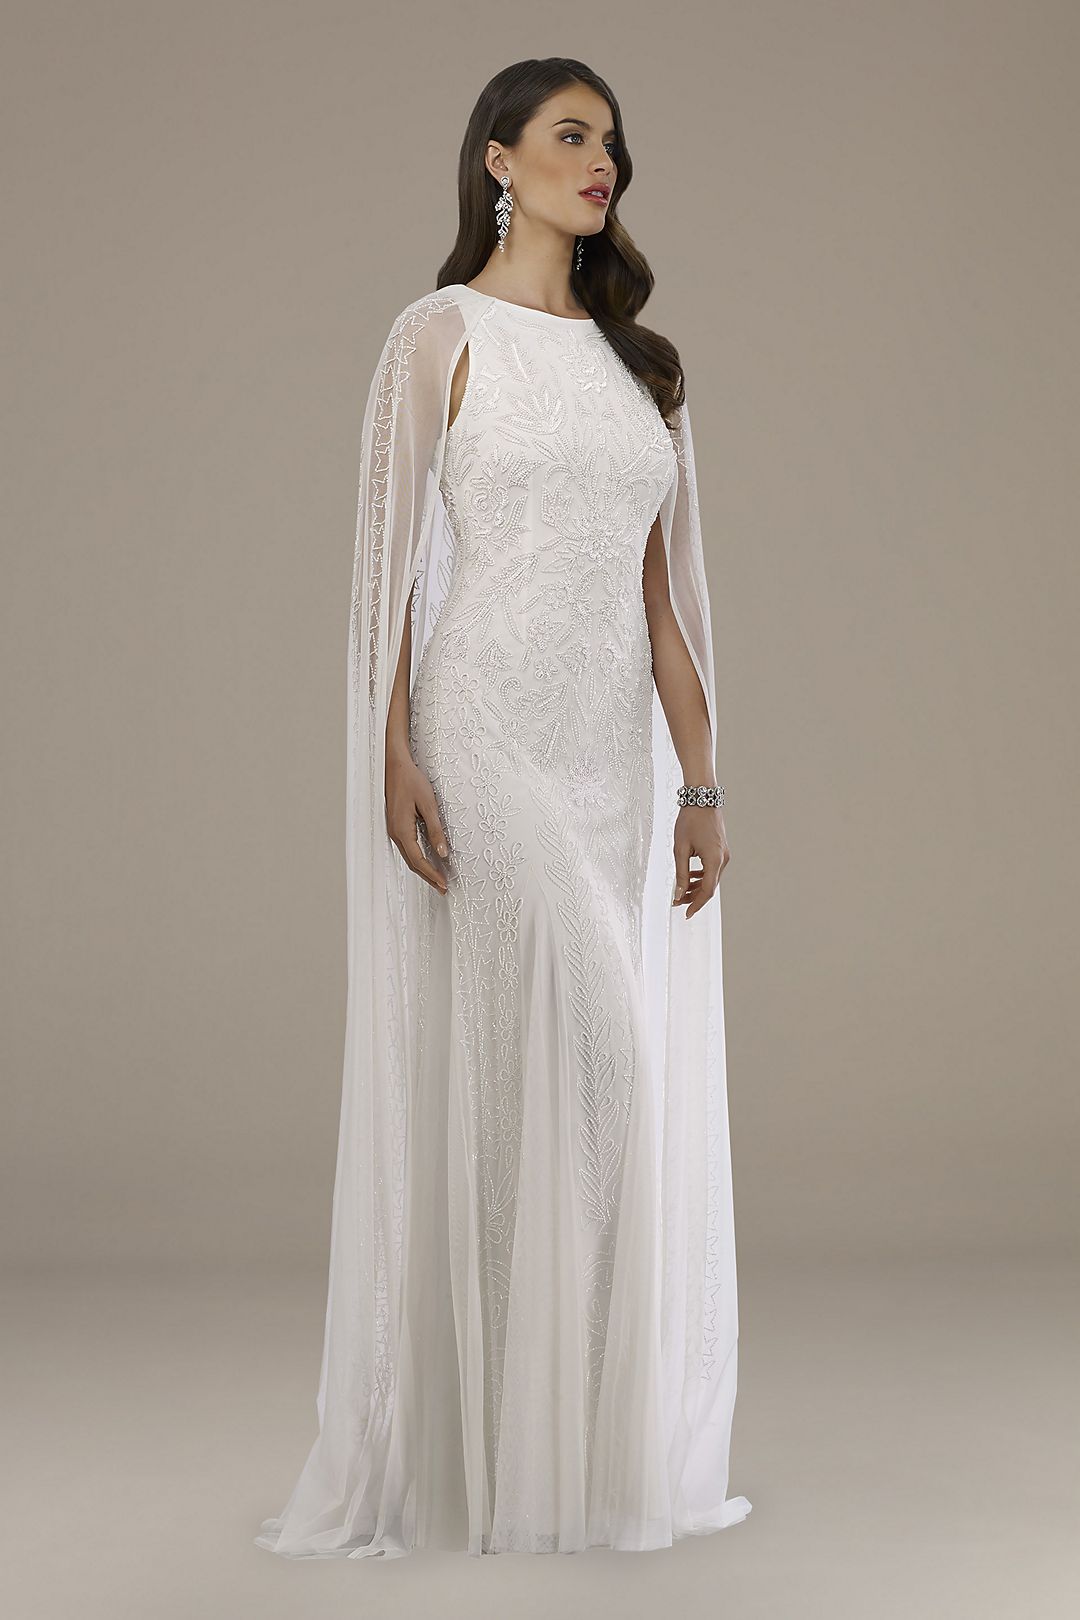 Lara Eve Beaded Cape Wedding Dress | David's Bridal